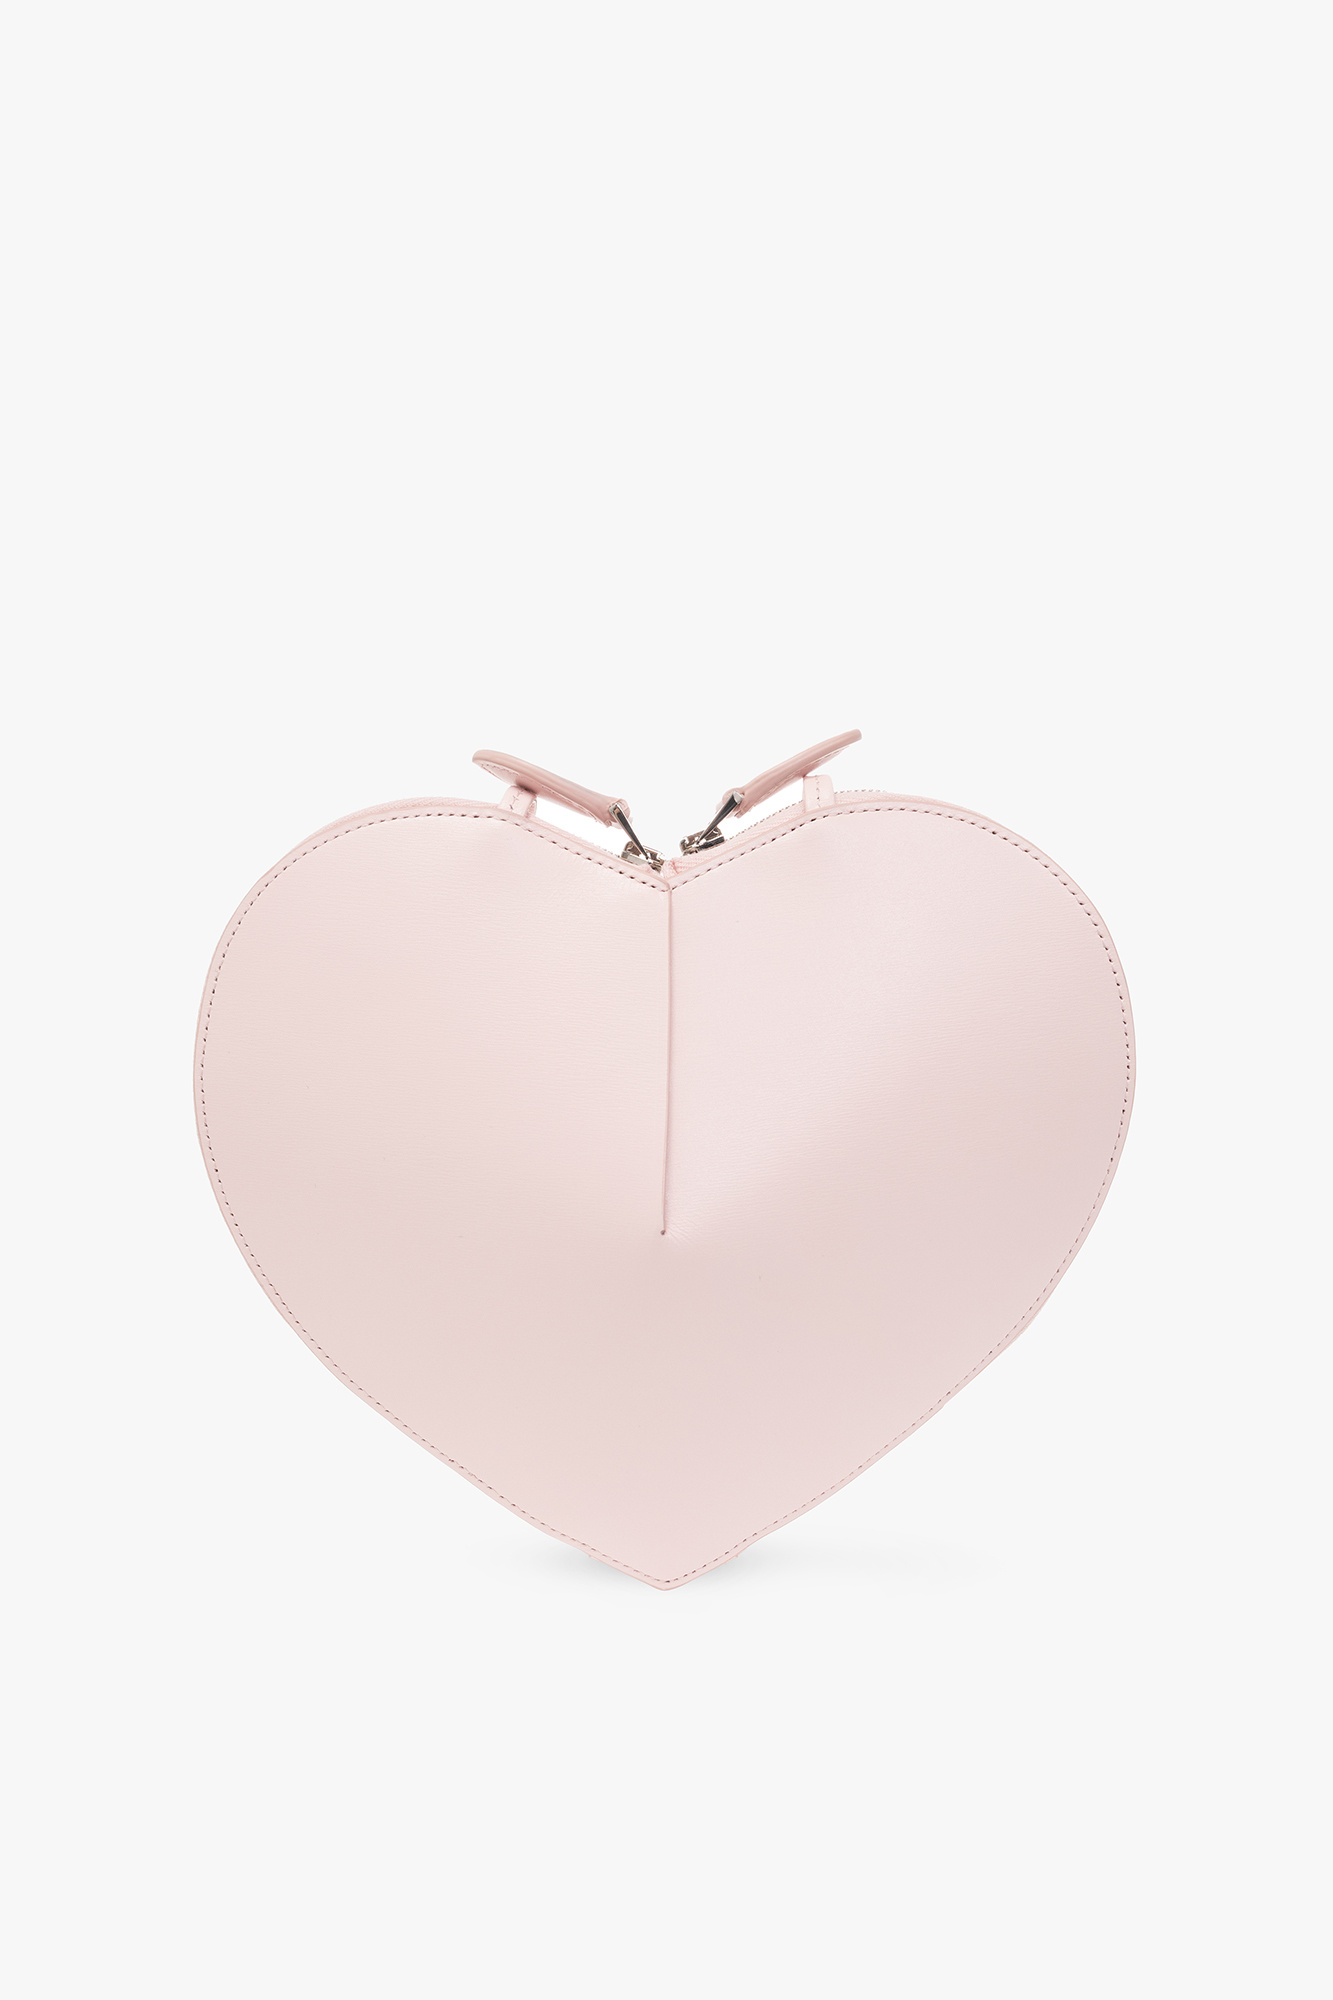 Alaïa Pink Le Coeur Shoulder Bag